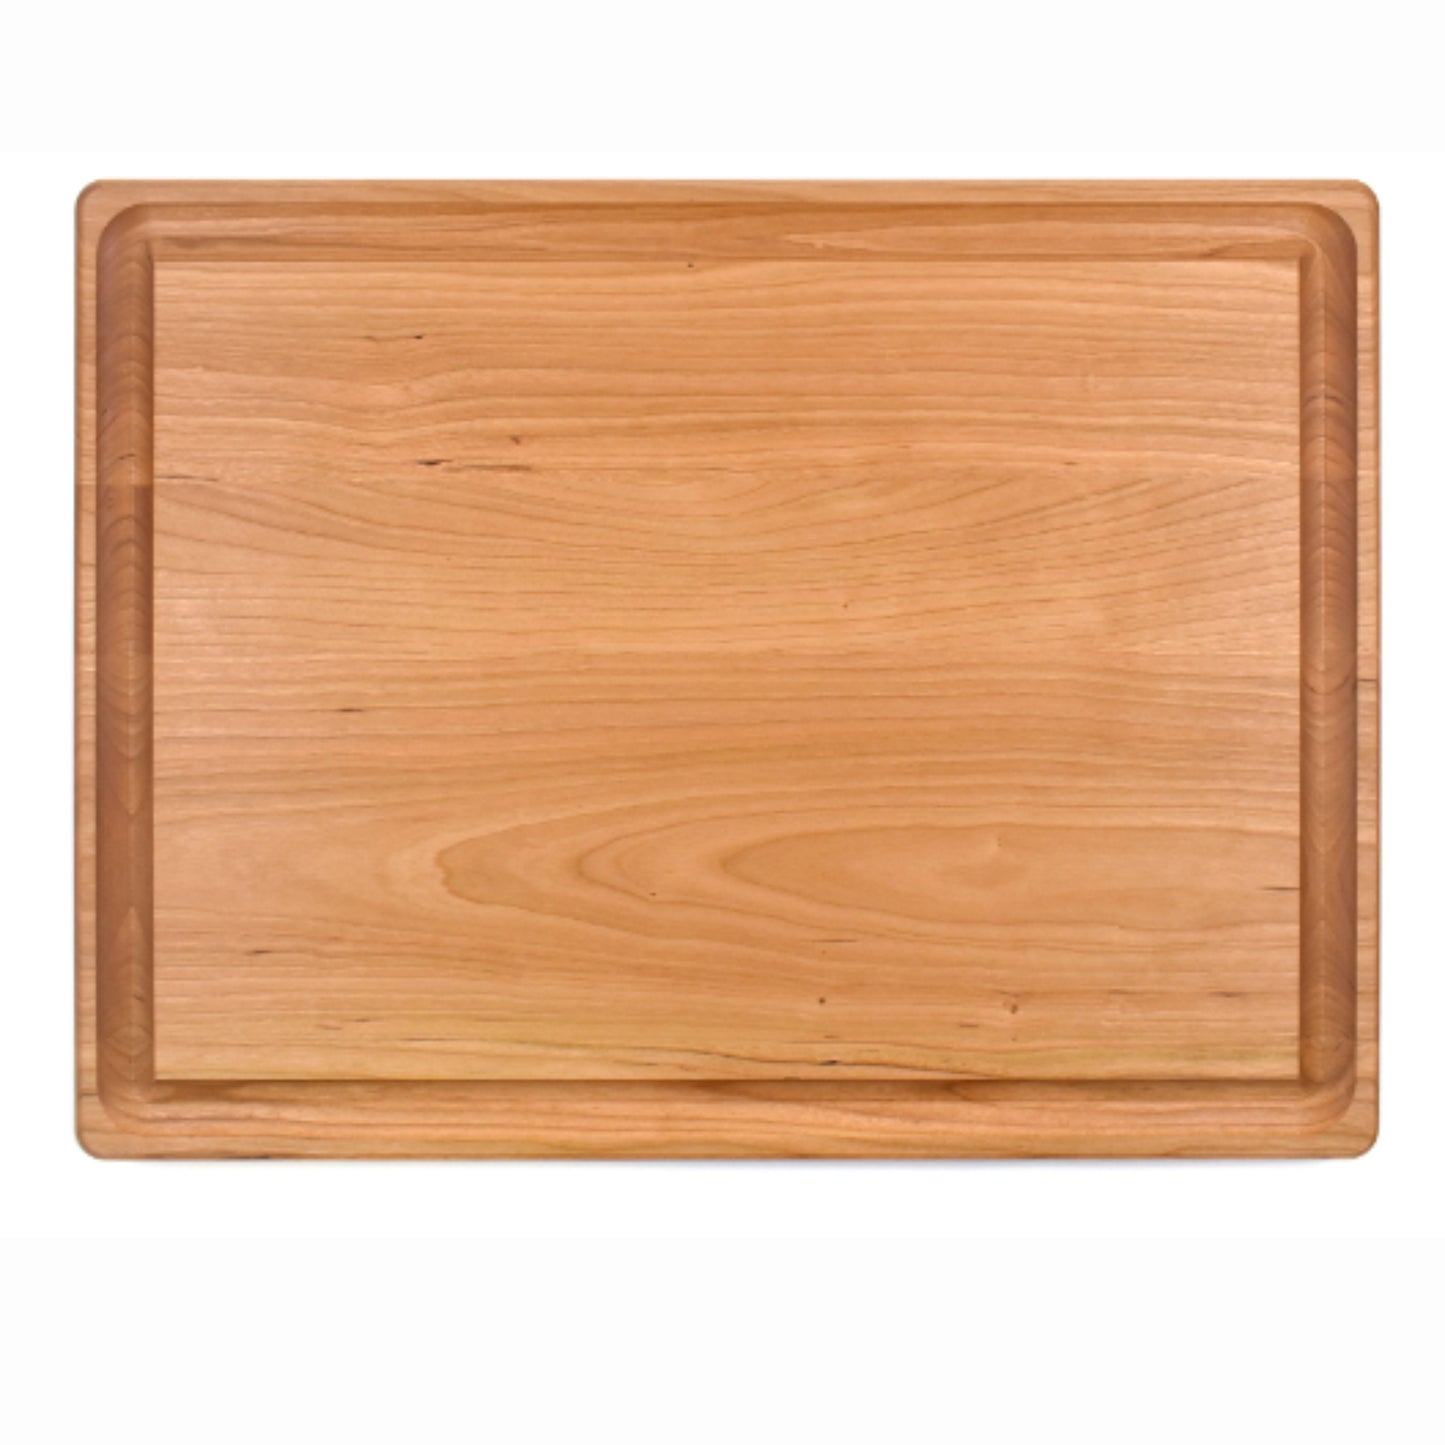 Large Slab Cherry Hard Wood Cutting Board 11" x 17" x 1" Thick